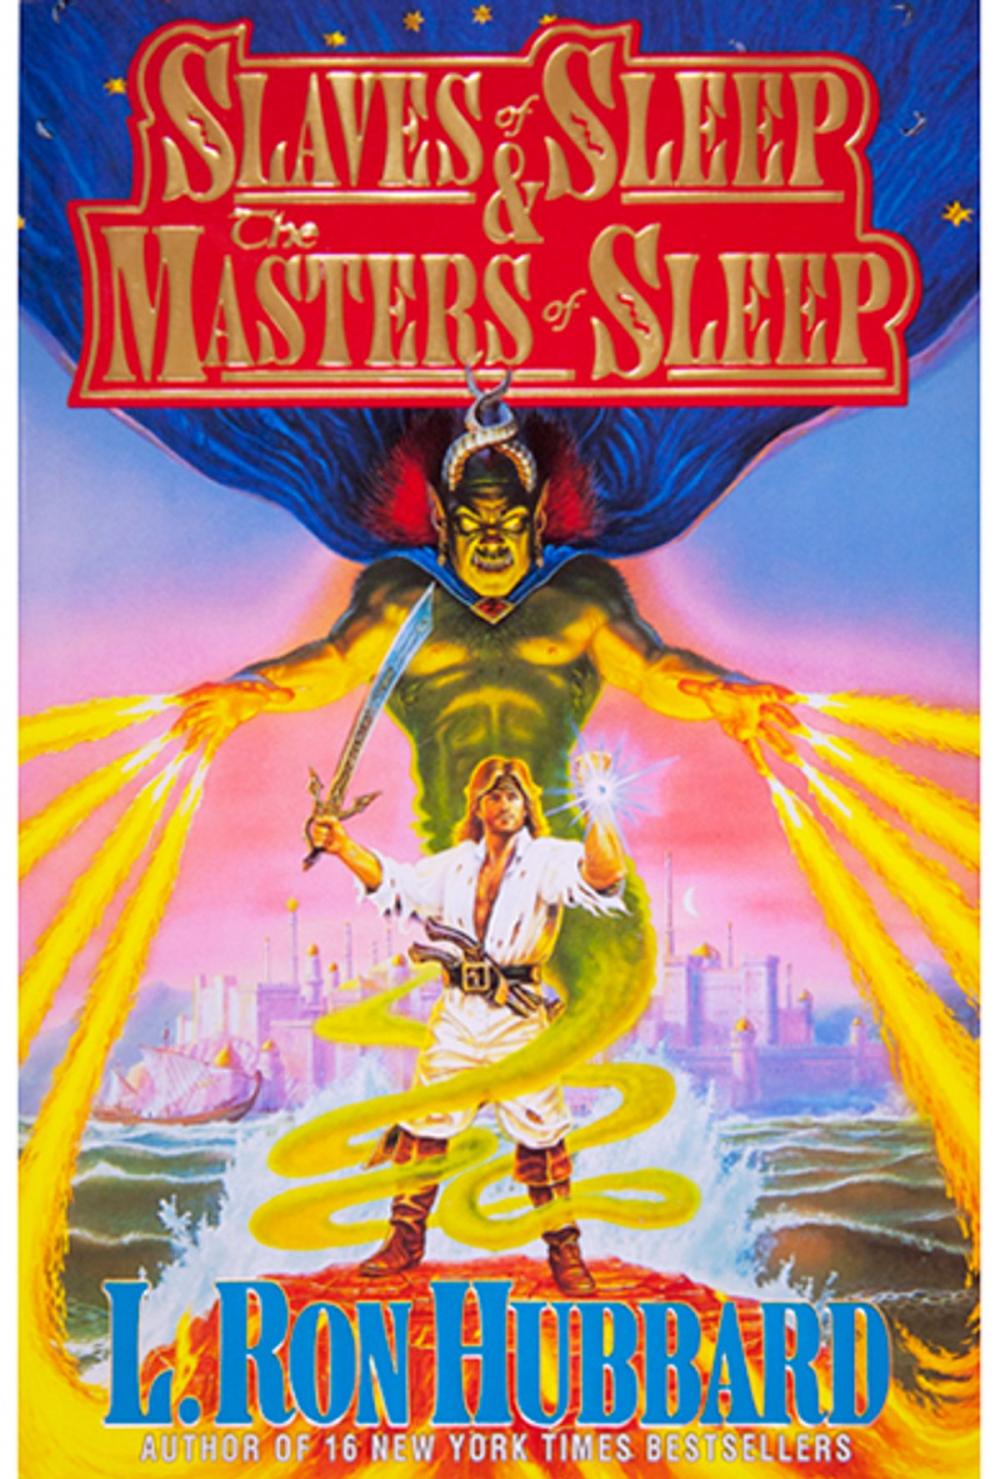 Big bigCover of Slaves of Sleep & the Masters of Sleep